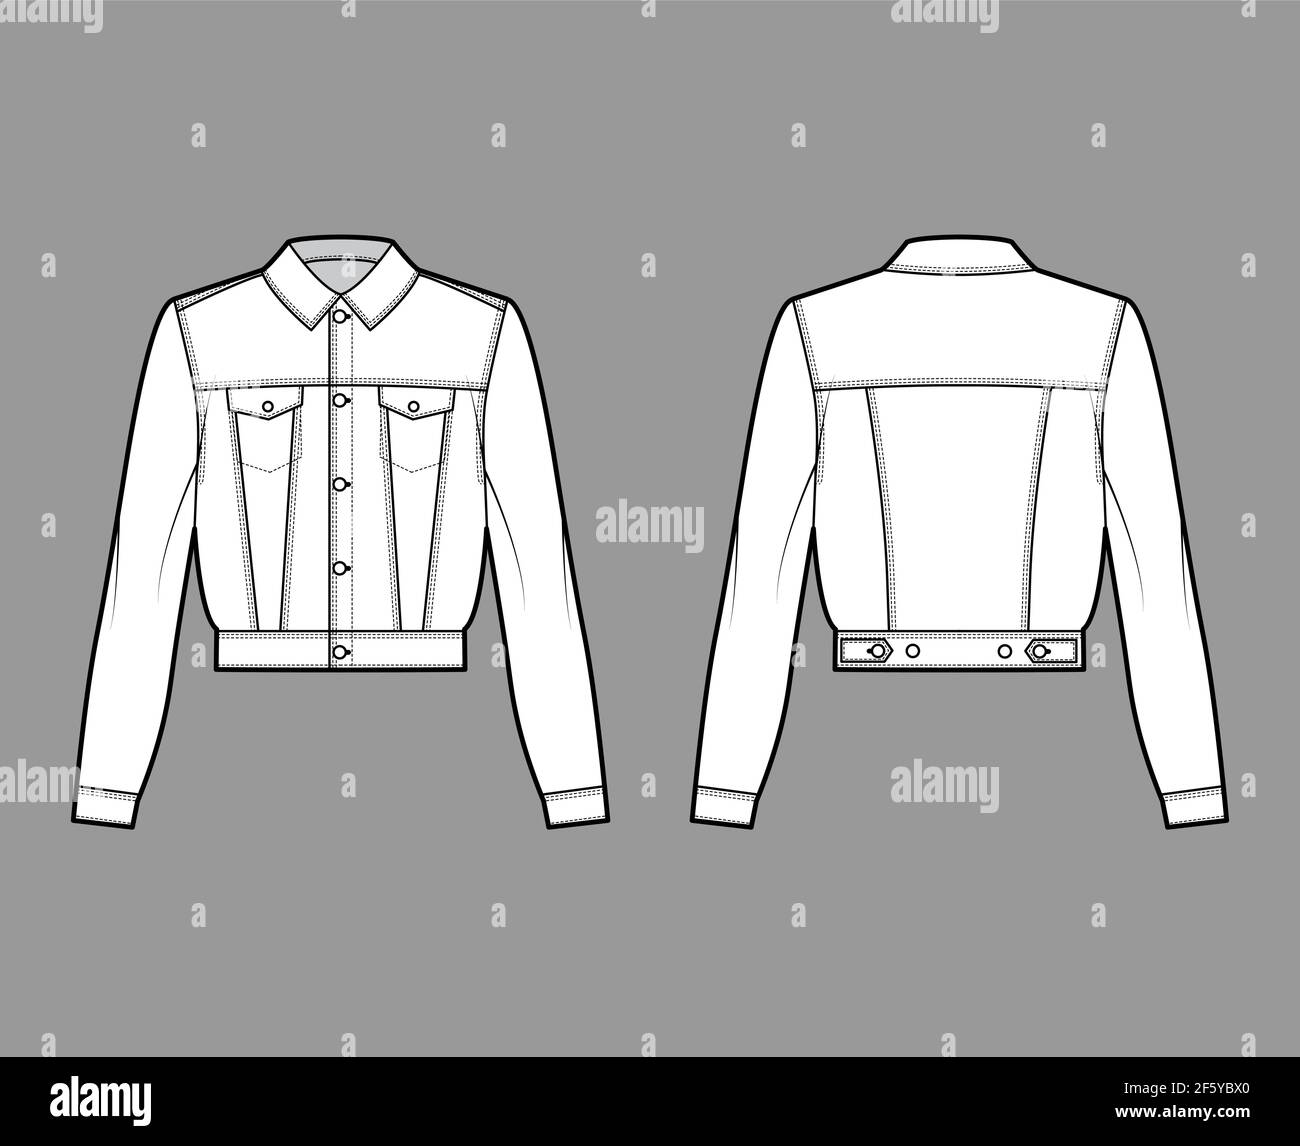 Cropped denim jacket technical fashion illustration with full waist ...